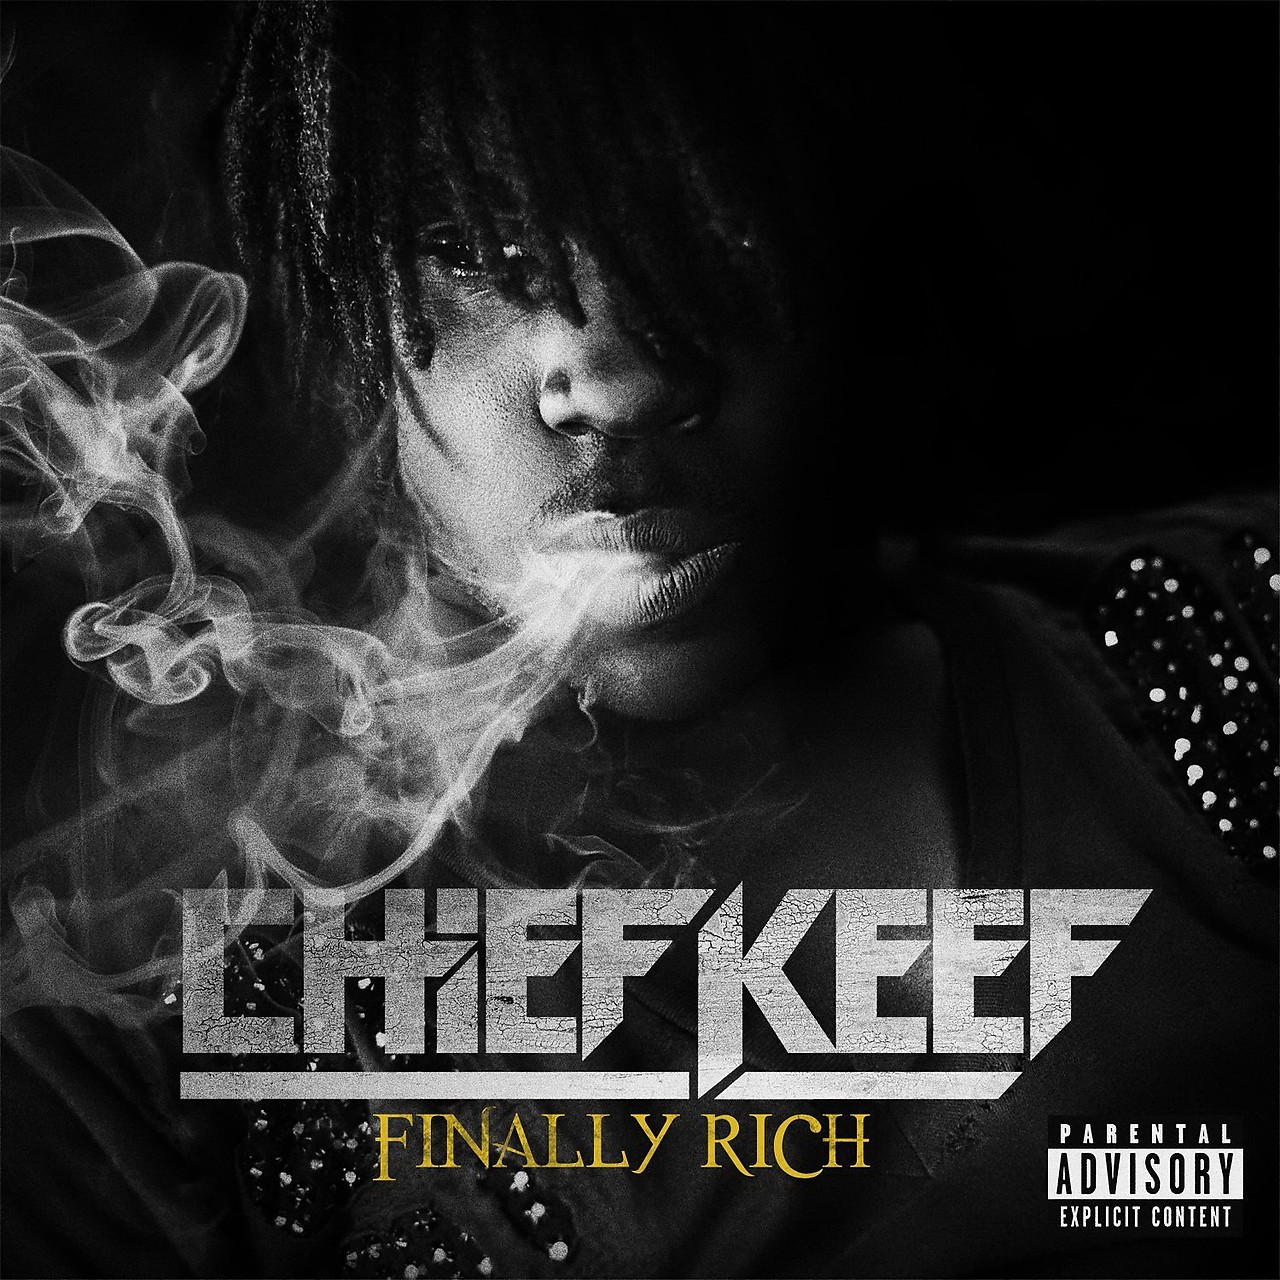 Chief Keef Album Sales